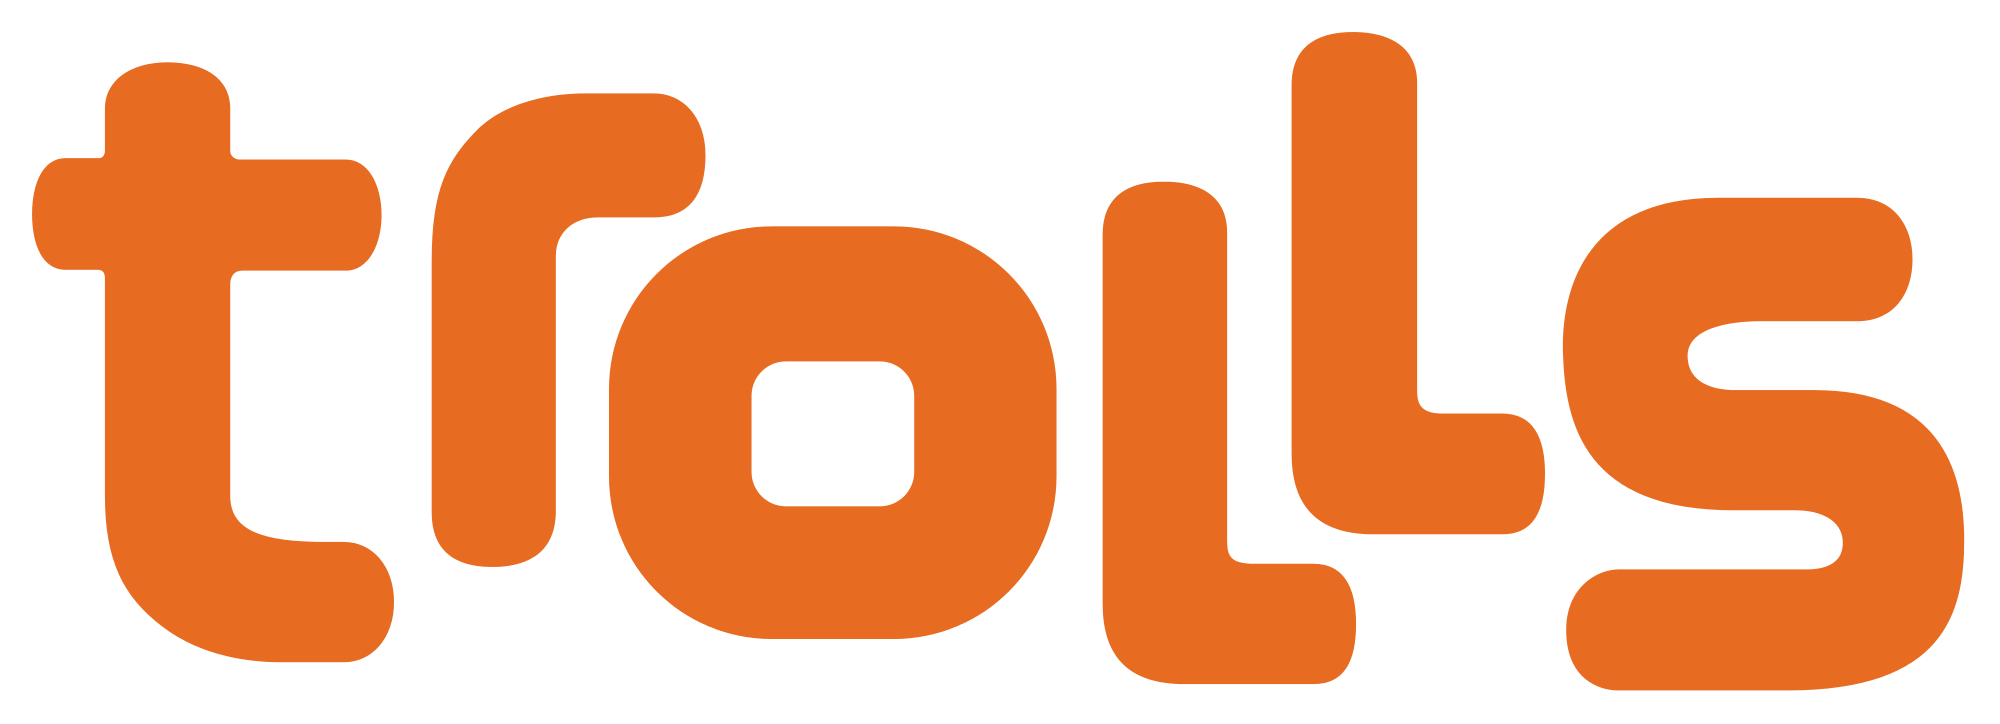 Trolls Logo - Trolls | Logopedia | FANDOM powered by Wikia